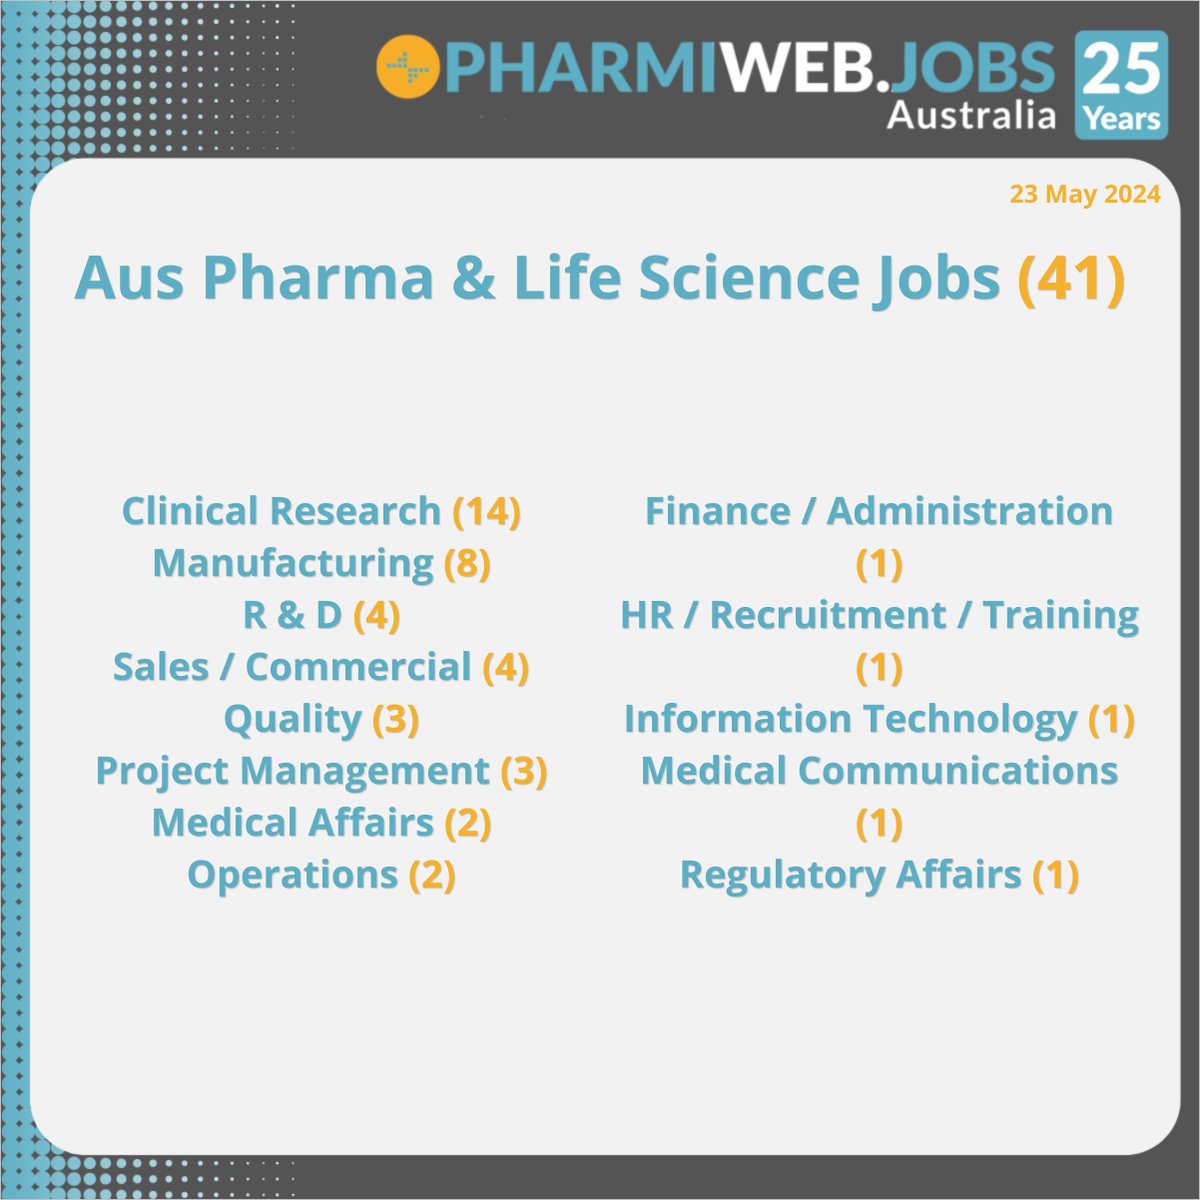 41 Pharma & Life Science Jobs Today
Search Now - phrmwb.com/3yHbjac

Register & Upload Your CV Now! phrmwb.com/3WQwhh2

#Pharma #pharmaceuticals #Biotech #ClinicalResearch #LifeSciences #MedicalDevices #Biotechnology #PharmaJobs #healthcare #jobs #Australia #PharmiWeb